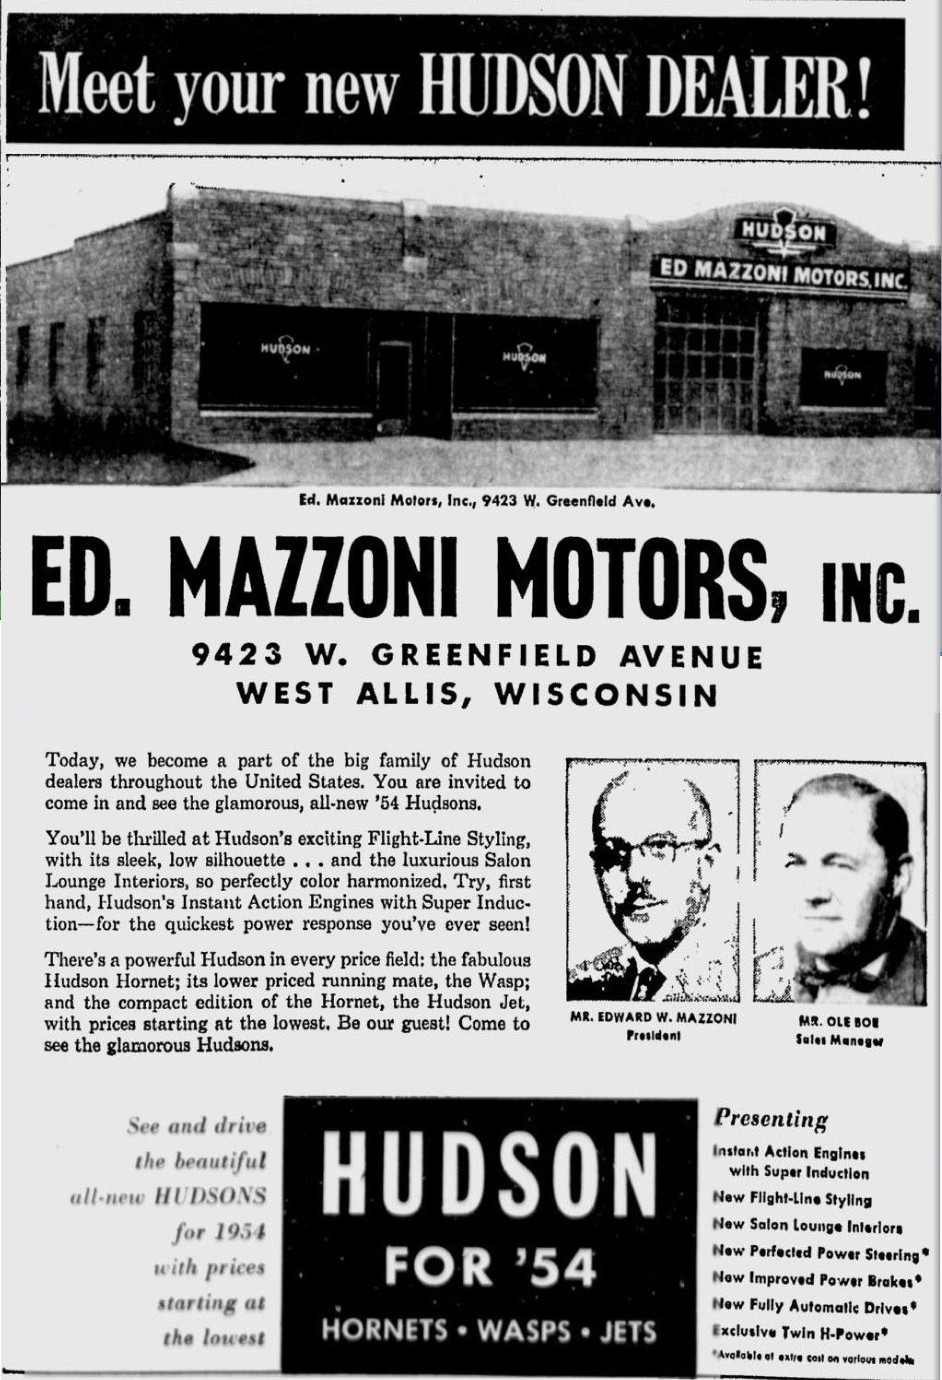 Ed Mazzoni Motors